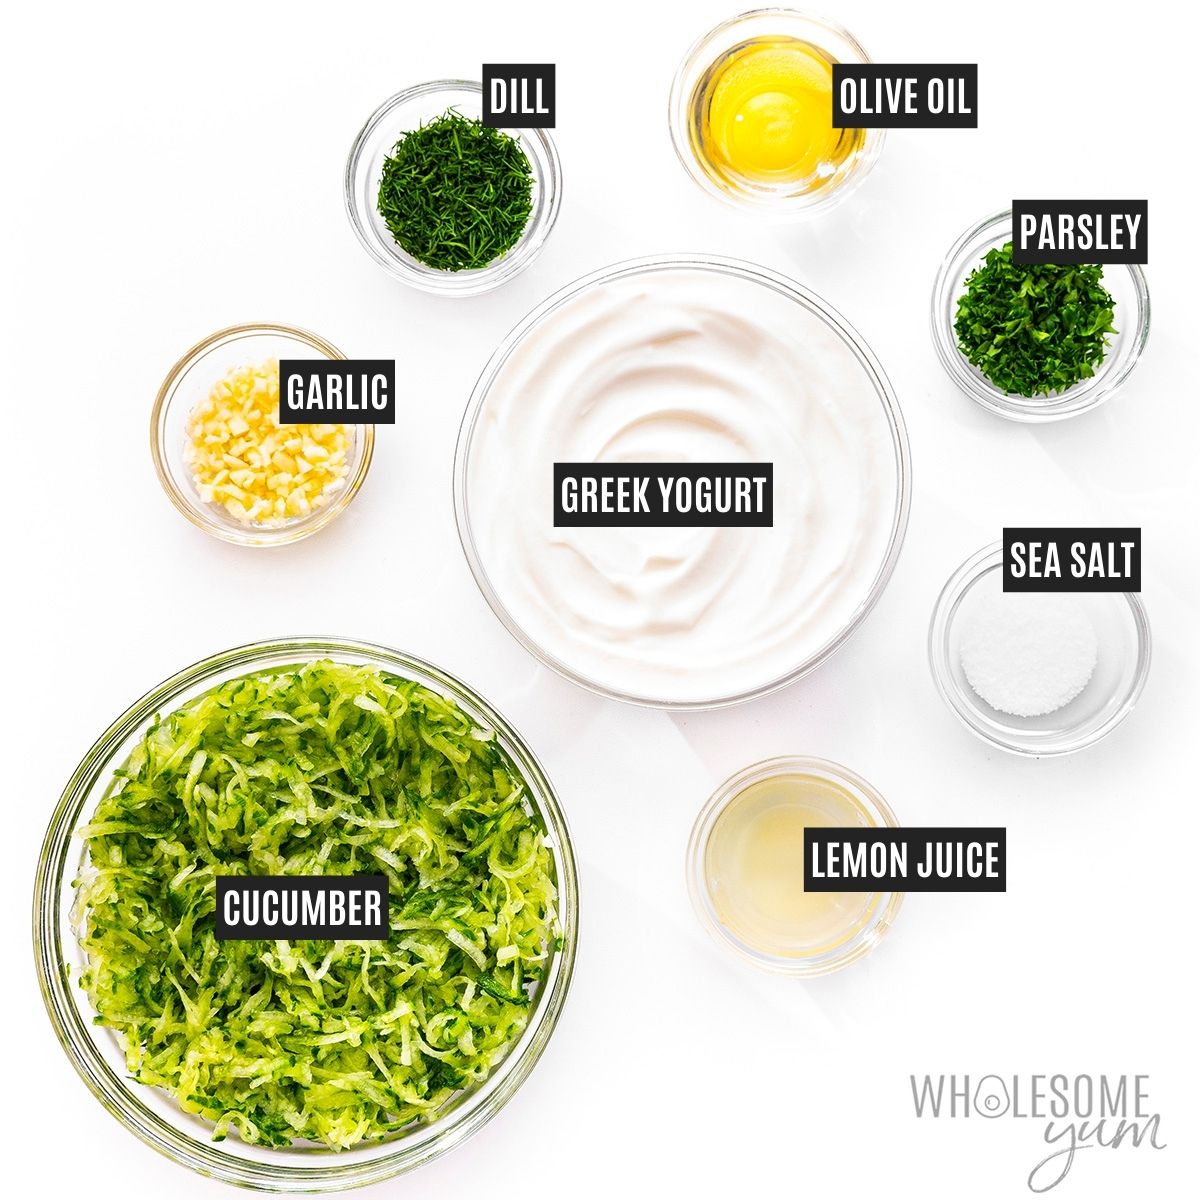 Bowls of grated cucumbers, Greek yogurt, garlic, lemon juice, olive oil, fresh herbs, and salt with labels.